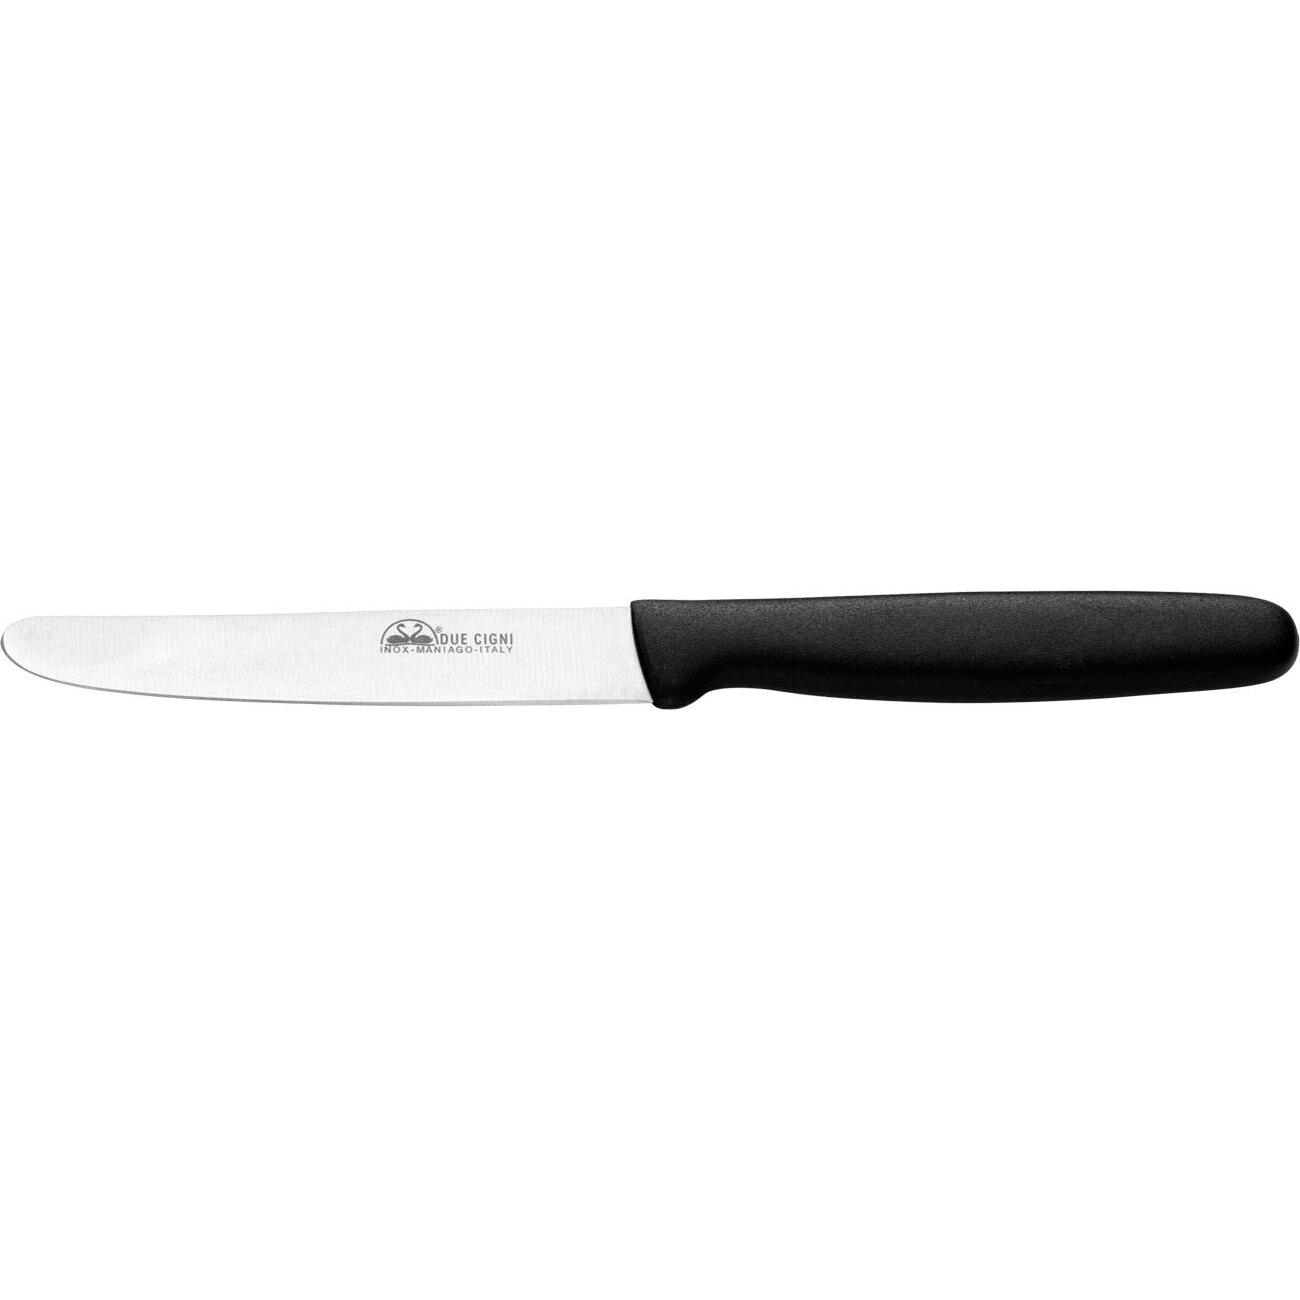 Нож кухонный Due Cigni Table 110 мм. Цвет - черный 2C 711/11 1904.00.65